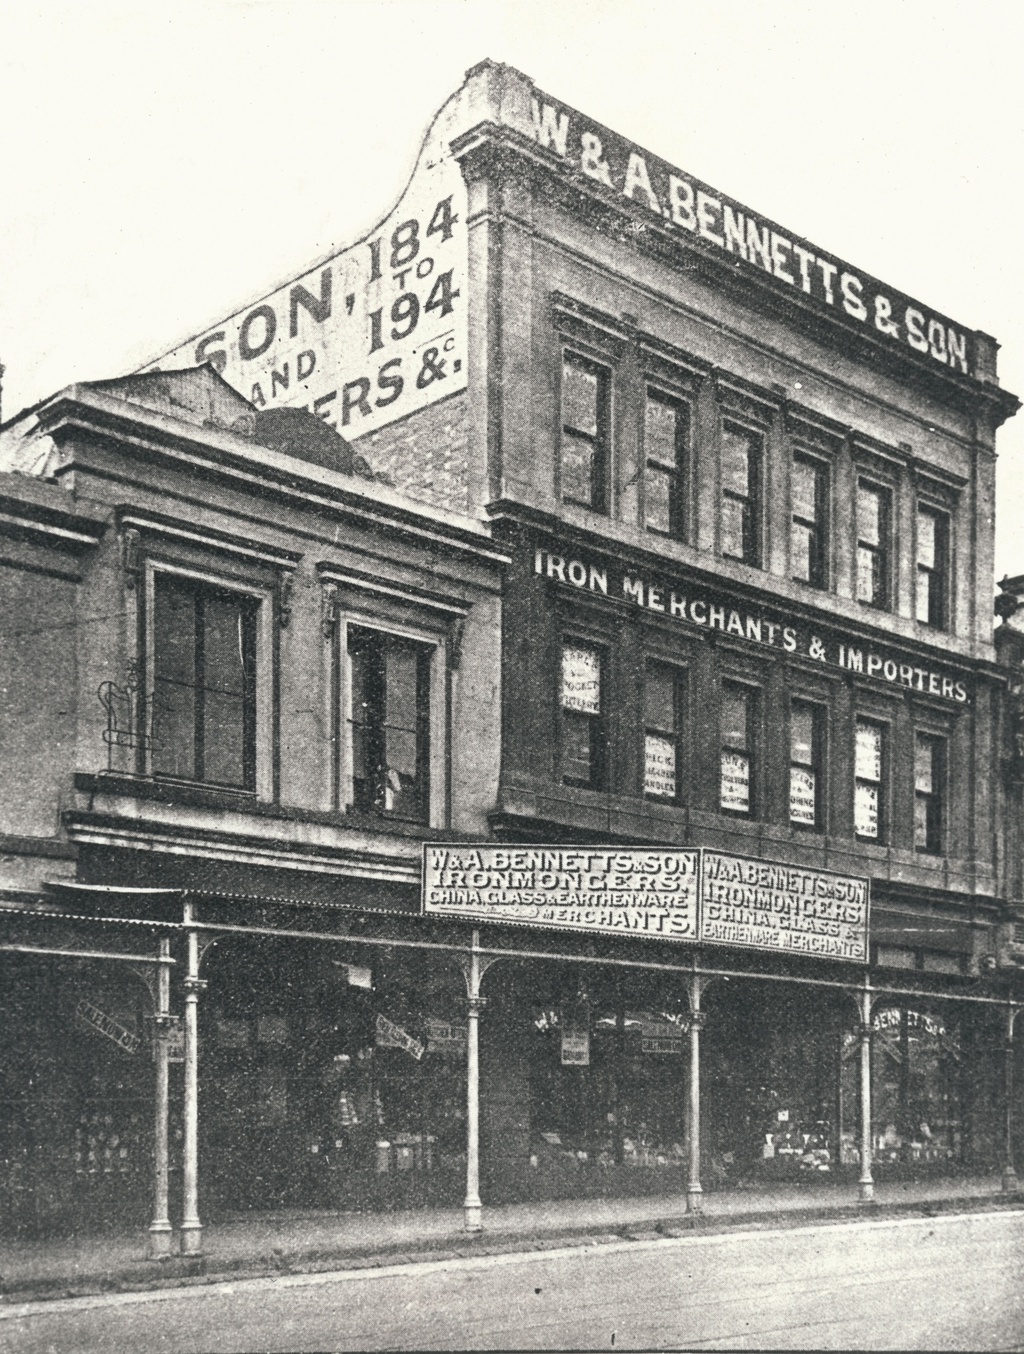 184-186 Brunswick Street, Fitzroy